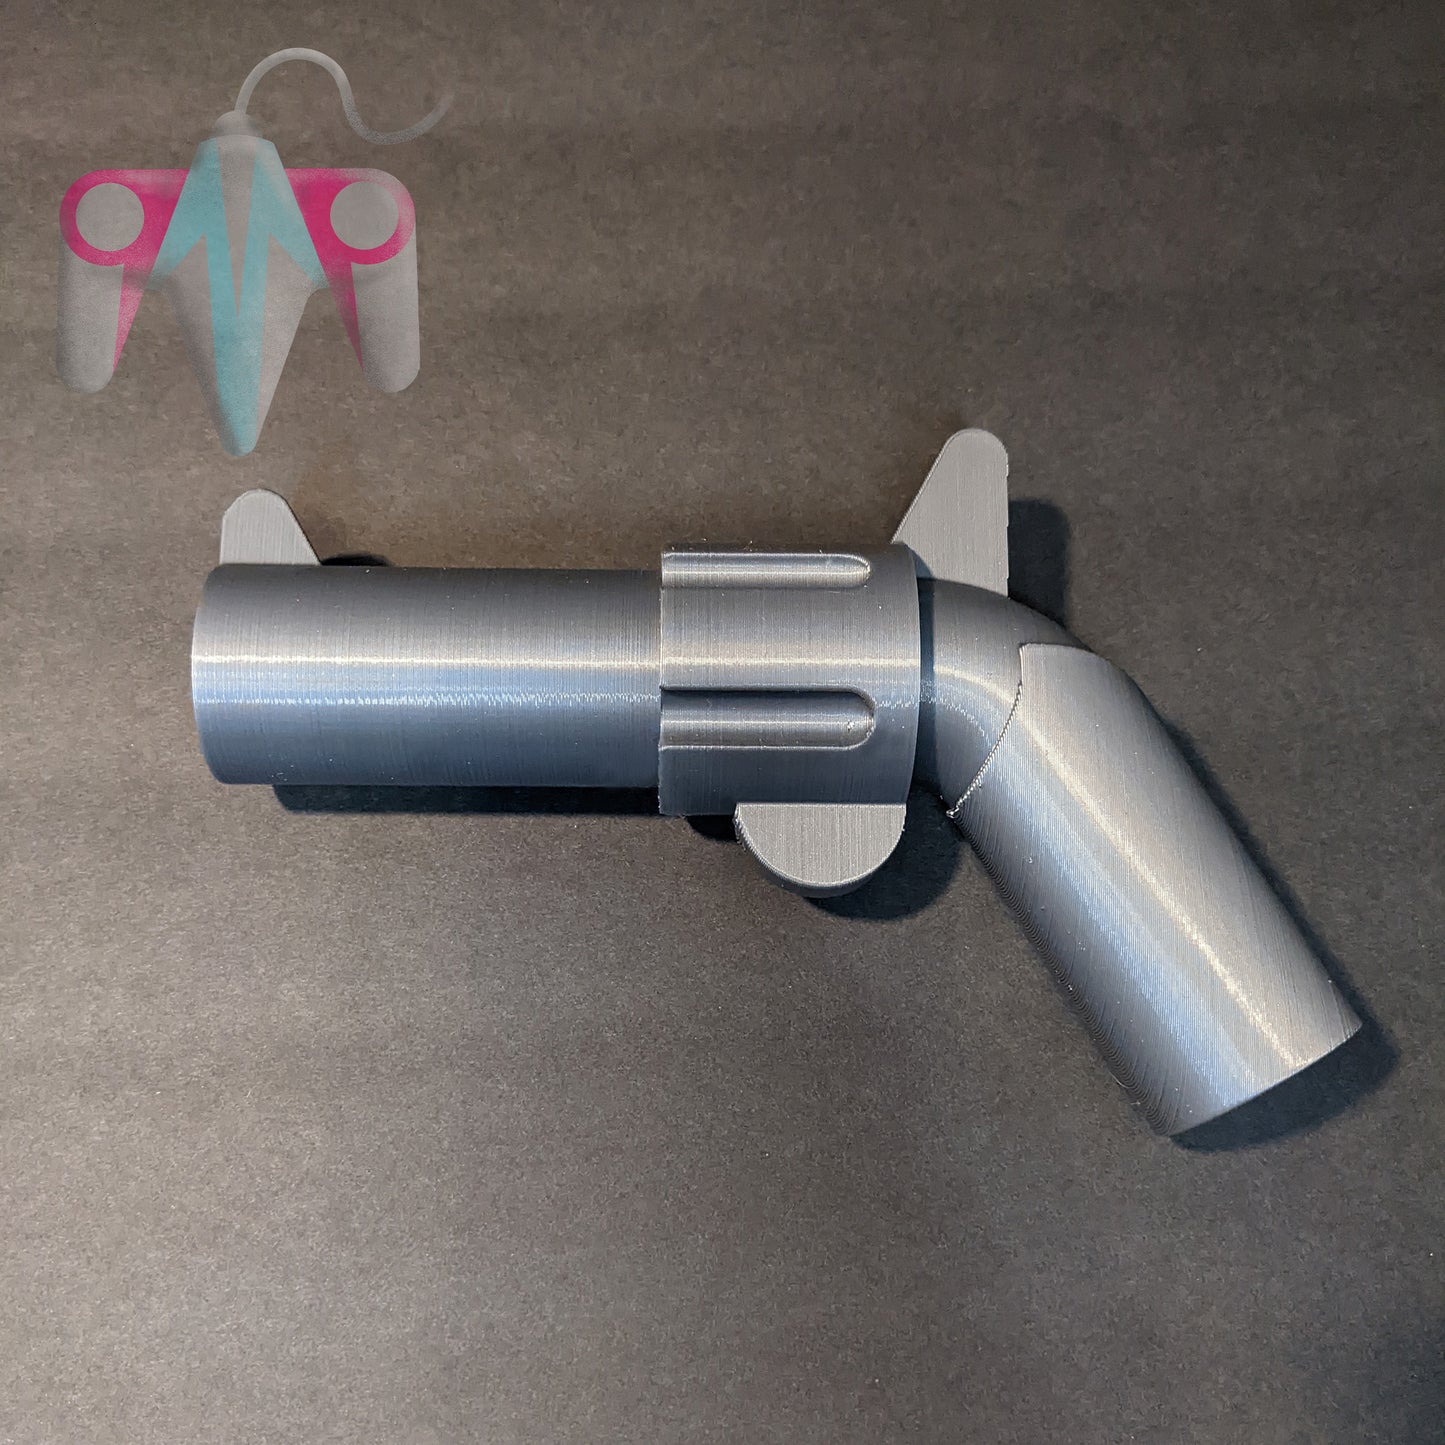 3D Printed Smuggler's Revolver